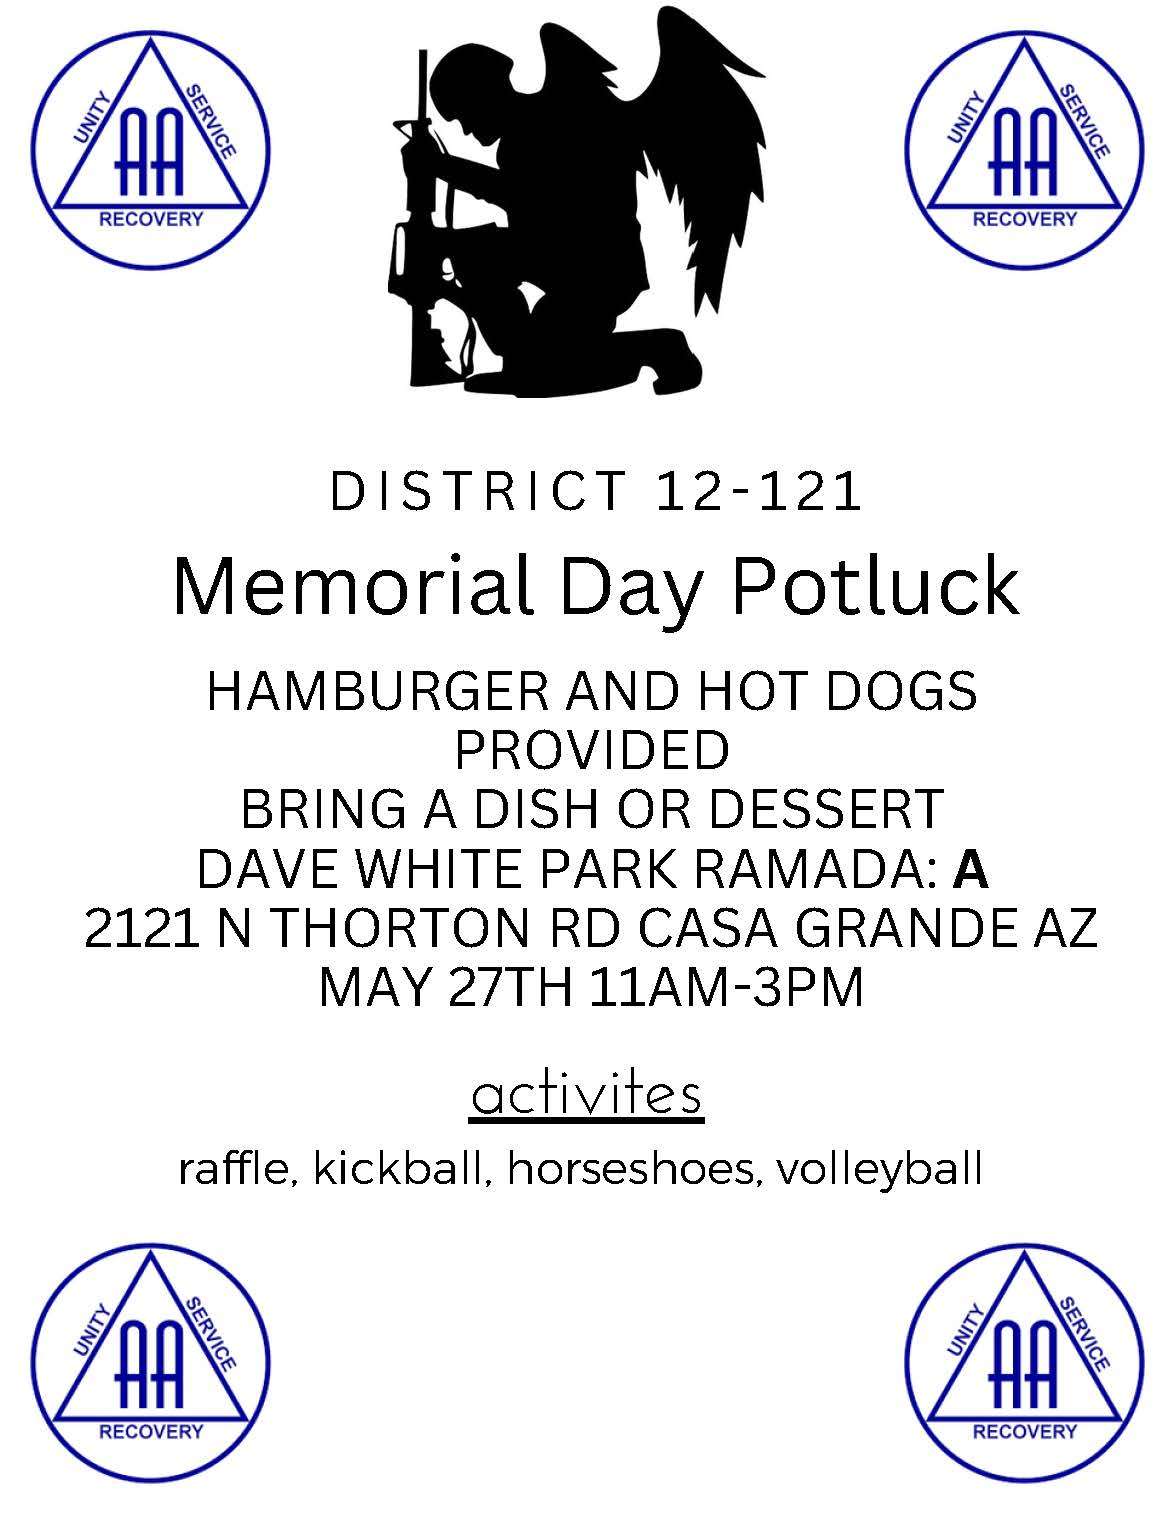 District 12-121 Memorial Day Picnic